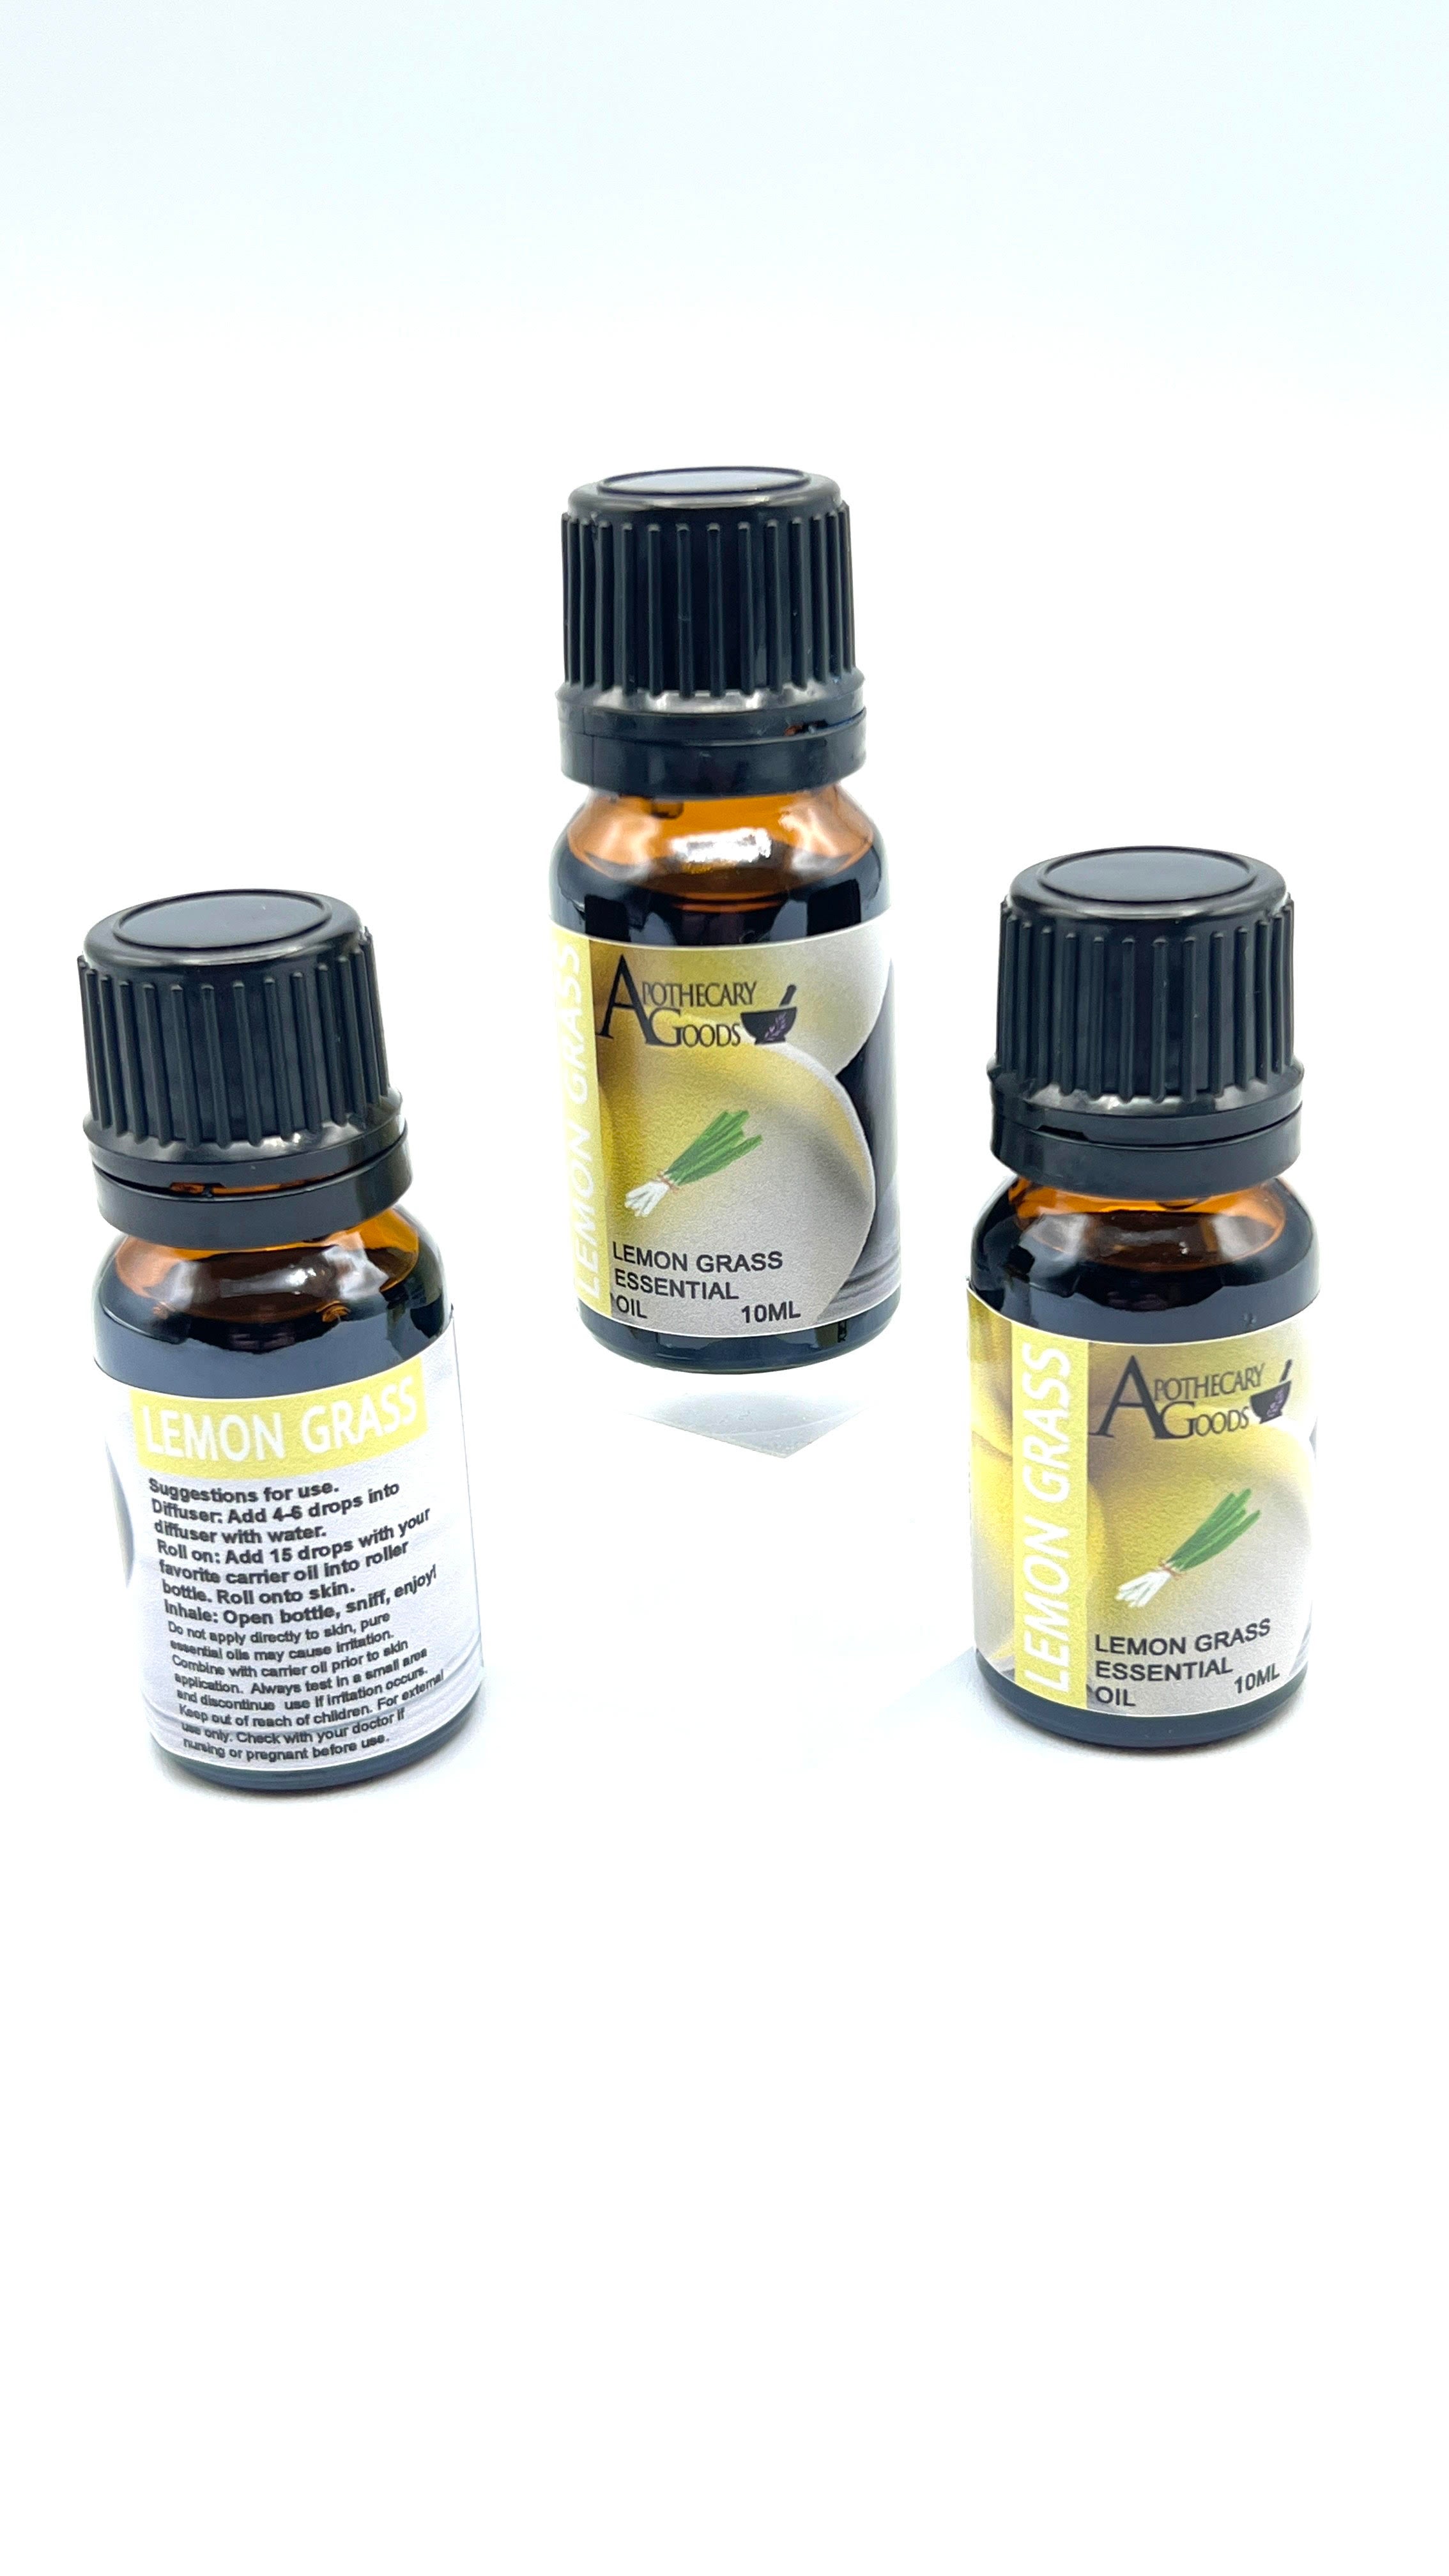 Lemongrass Essential Oil - Essential Oil Apothecary